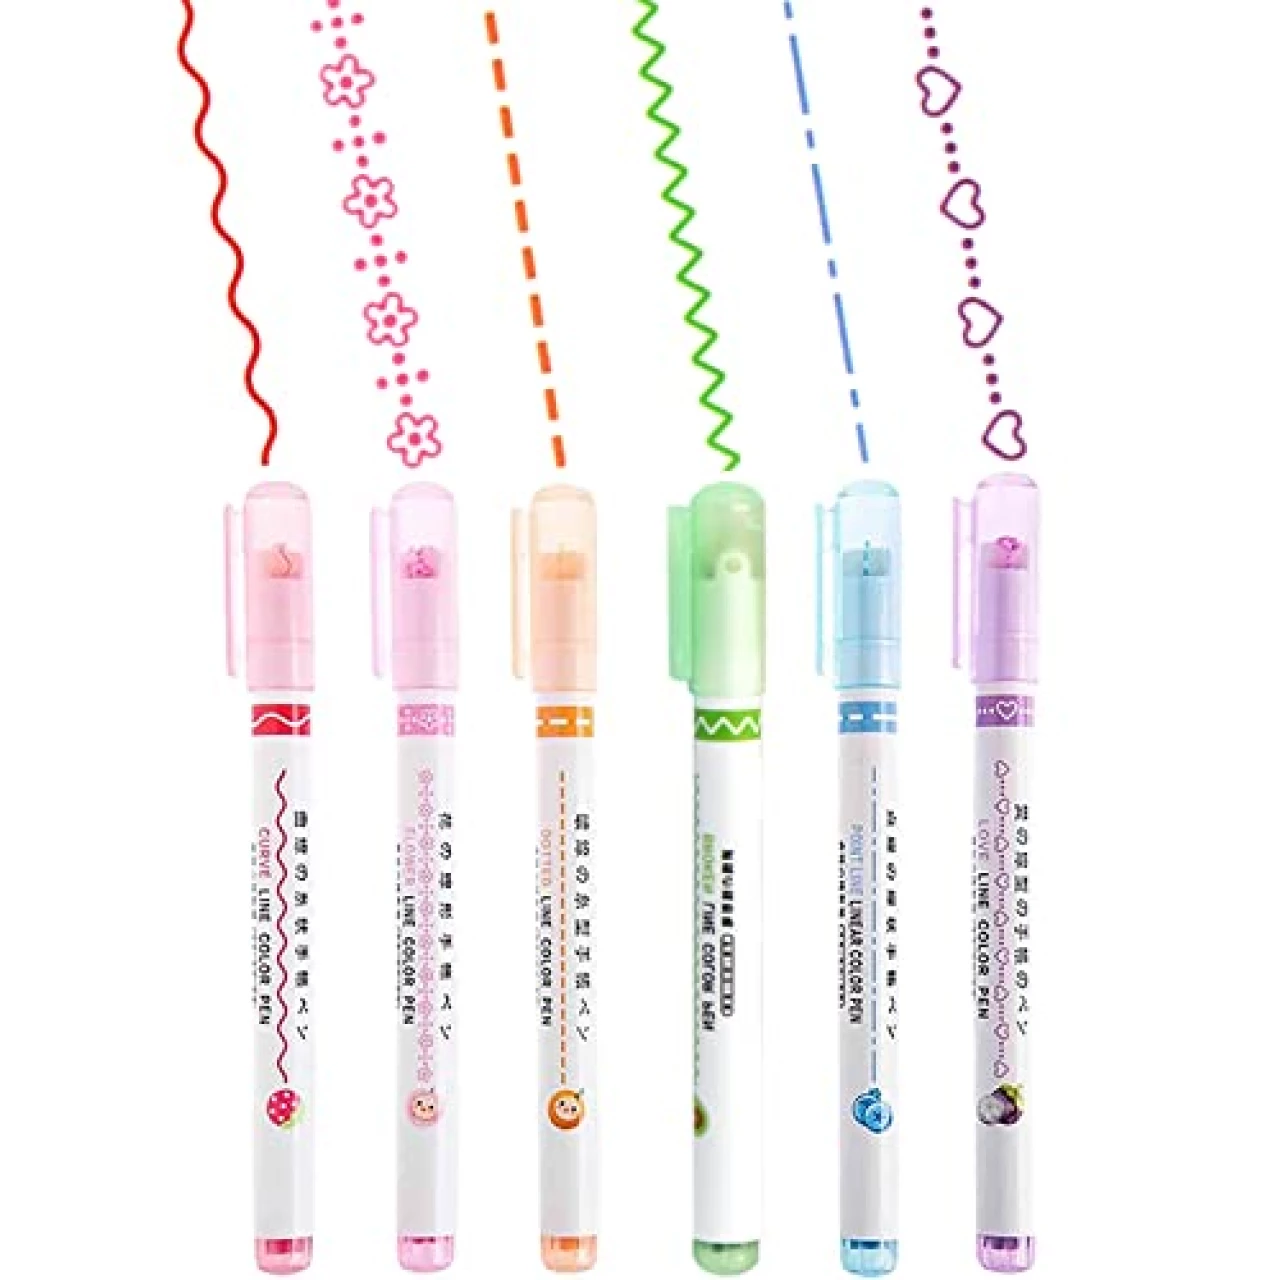 znvwki Curve Highlighter Pen Set, Colored Pens with 6 Different Shapes